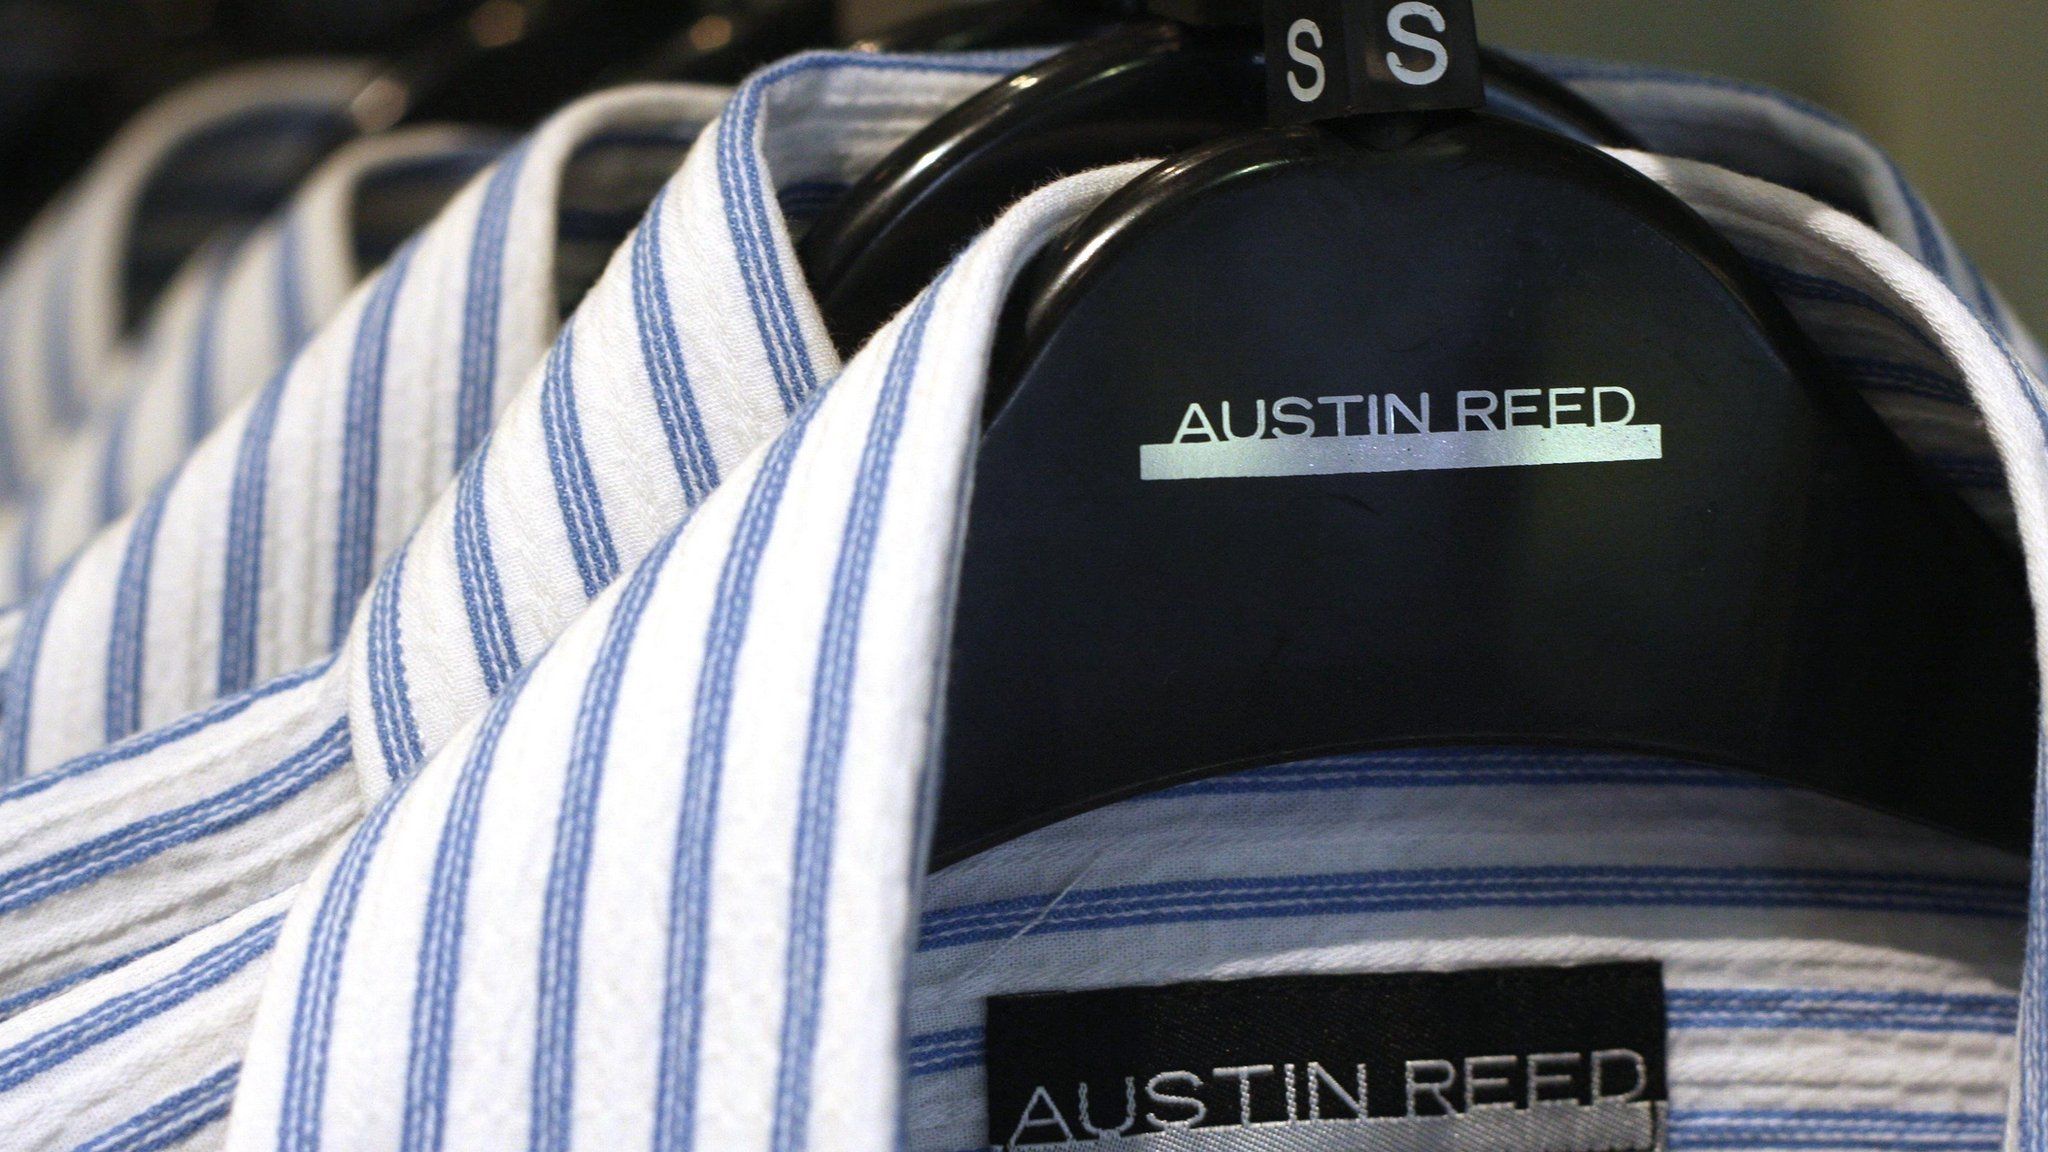 Austin Reed shirts on a rack